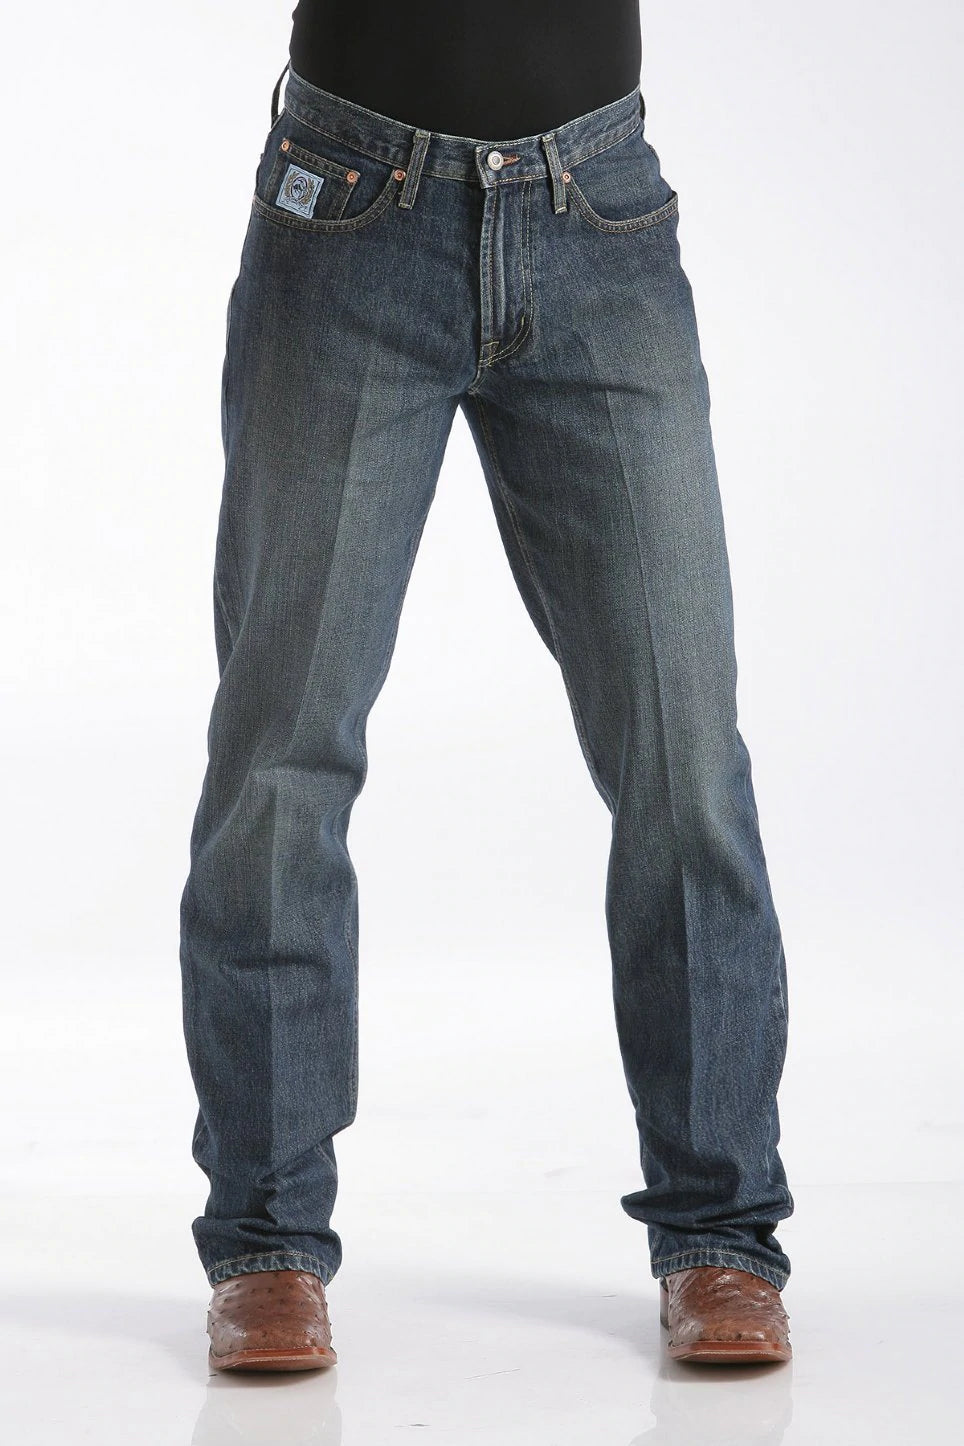 Cinch | Mens | Jeans | Straight | 36" | White Label | Dark